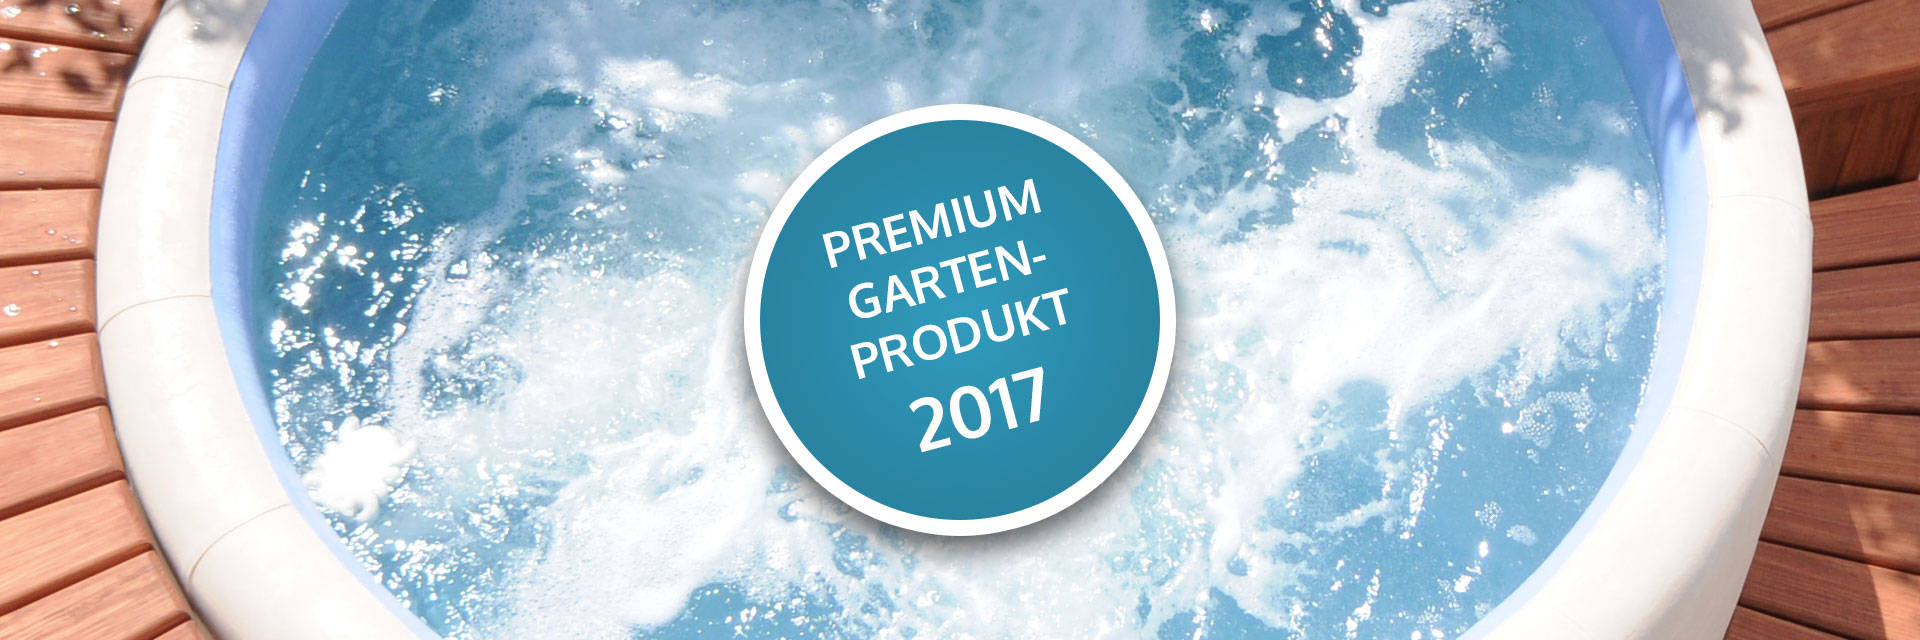 softub-whirlpool-premiumprodukt-aquasaar